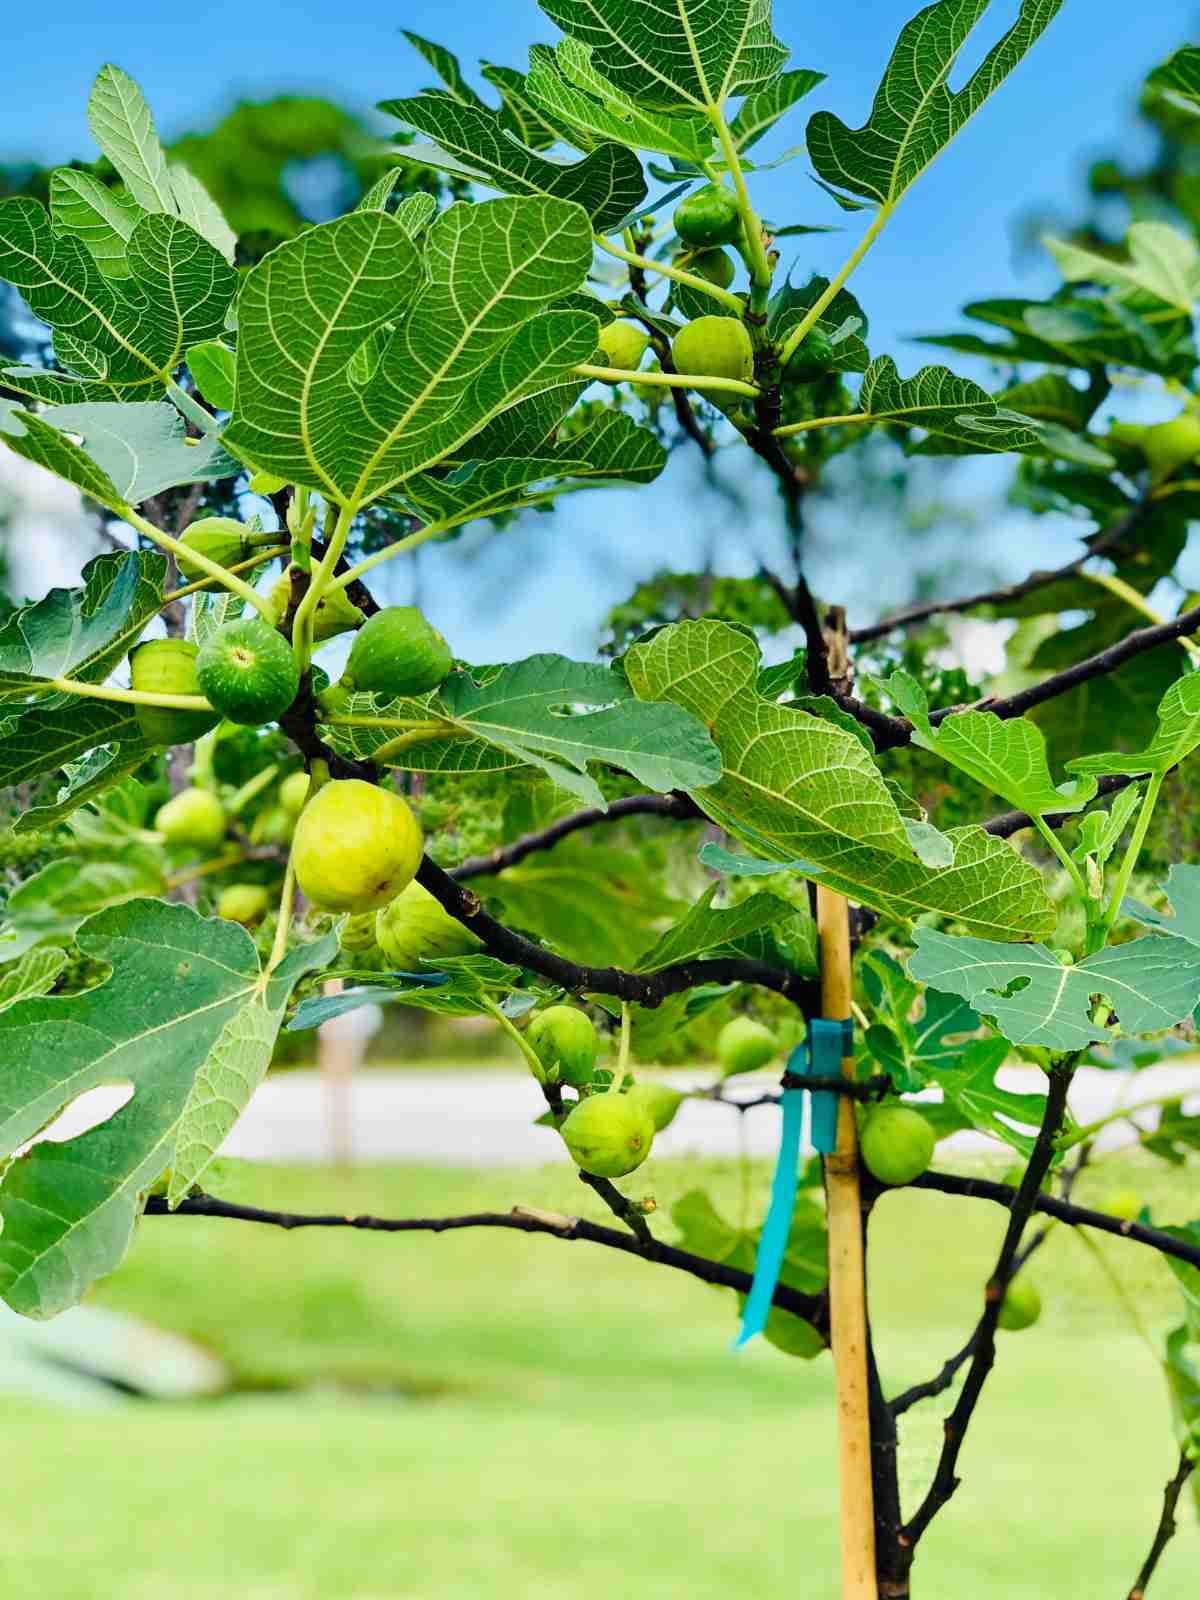 How to Trim a Fig Tree